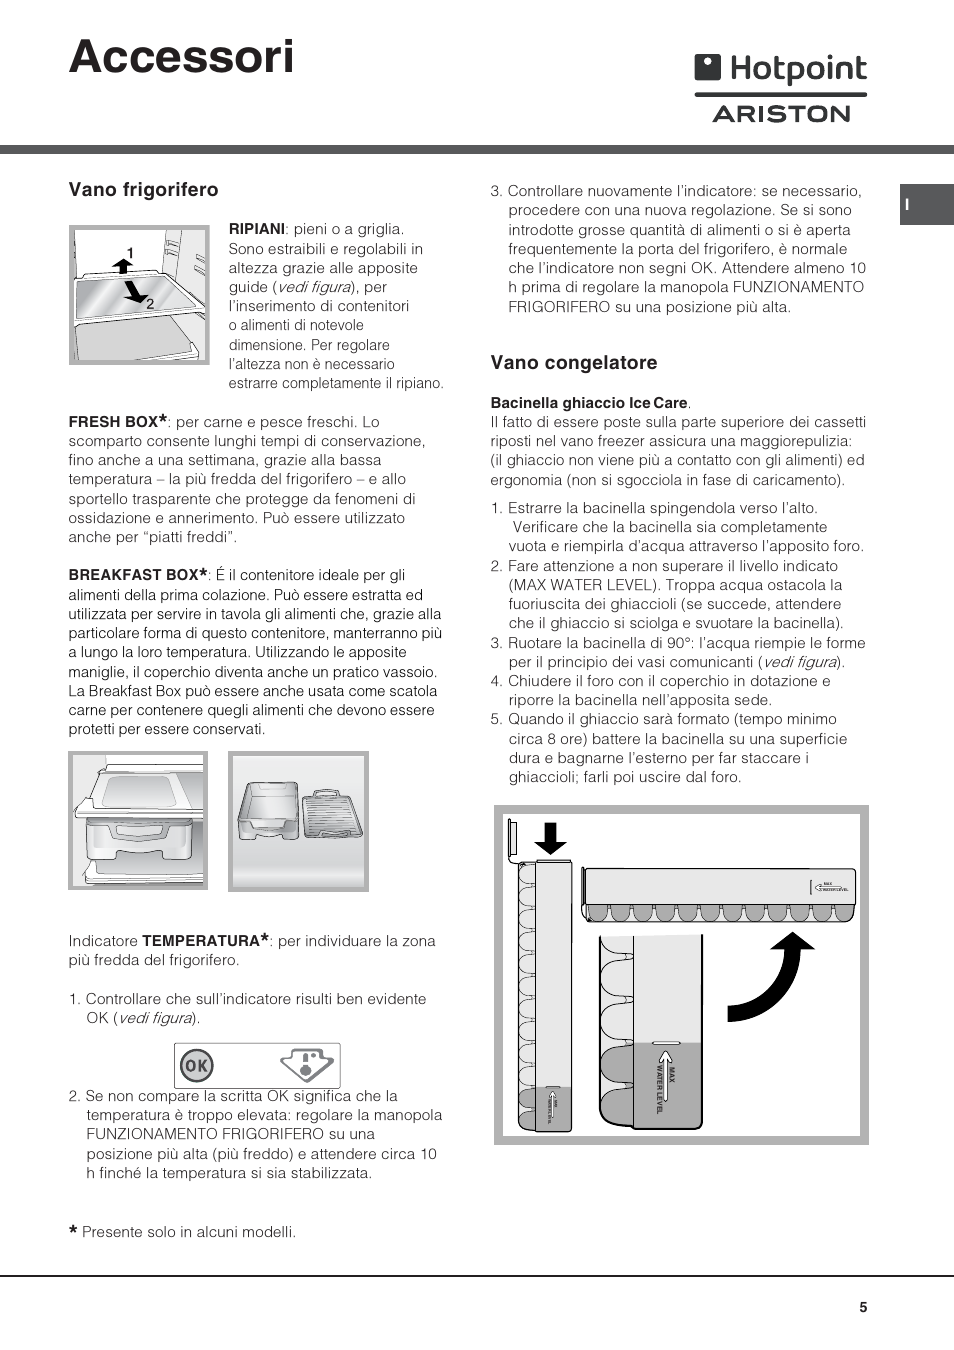 Accessori, Vano frigorifero, Vano congelatore | Hotpoint Ariston Combiné  NMBL 1922 CVW-HA User Manual | Page 5 / 60 | Original mode